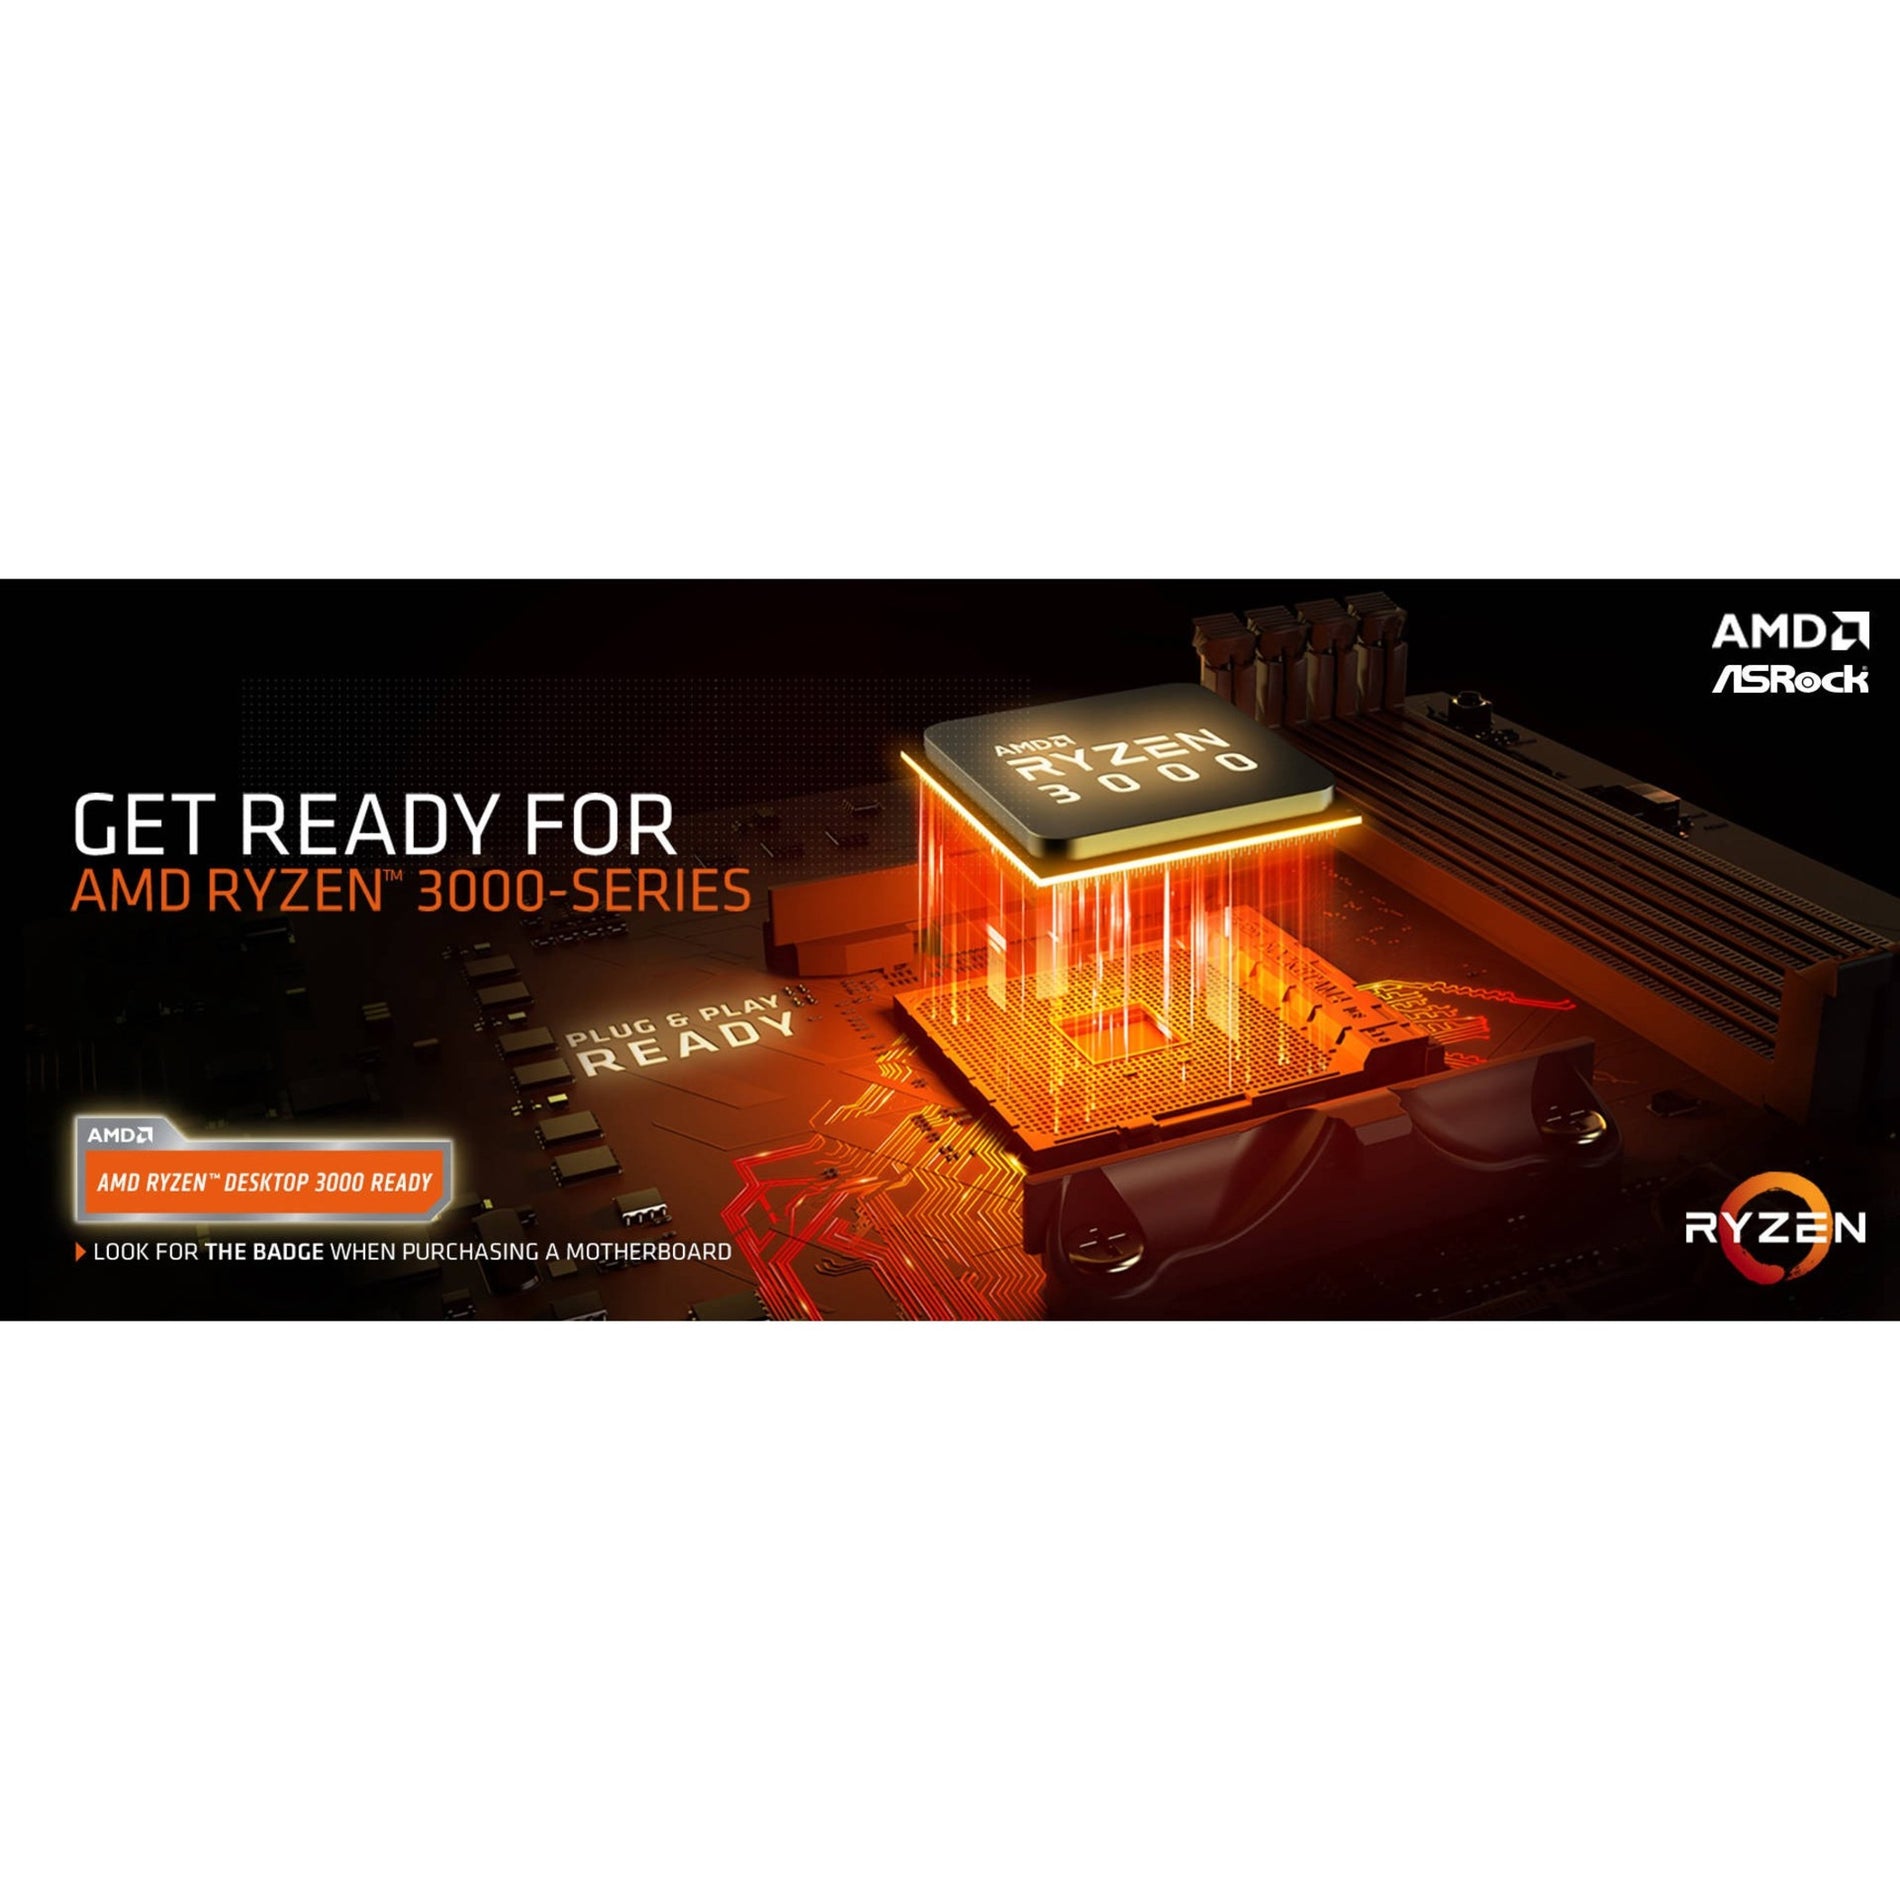 ASRock X570 STEEL LEGEND WIFI AX Desktop Motherboard, AMD X570 Chipset, ATX Form Factor, Matte Black